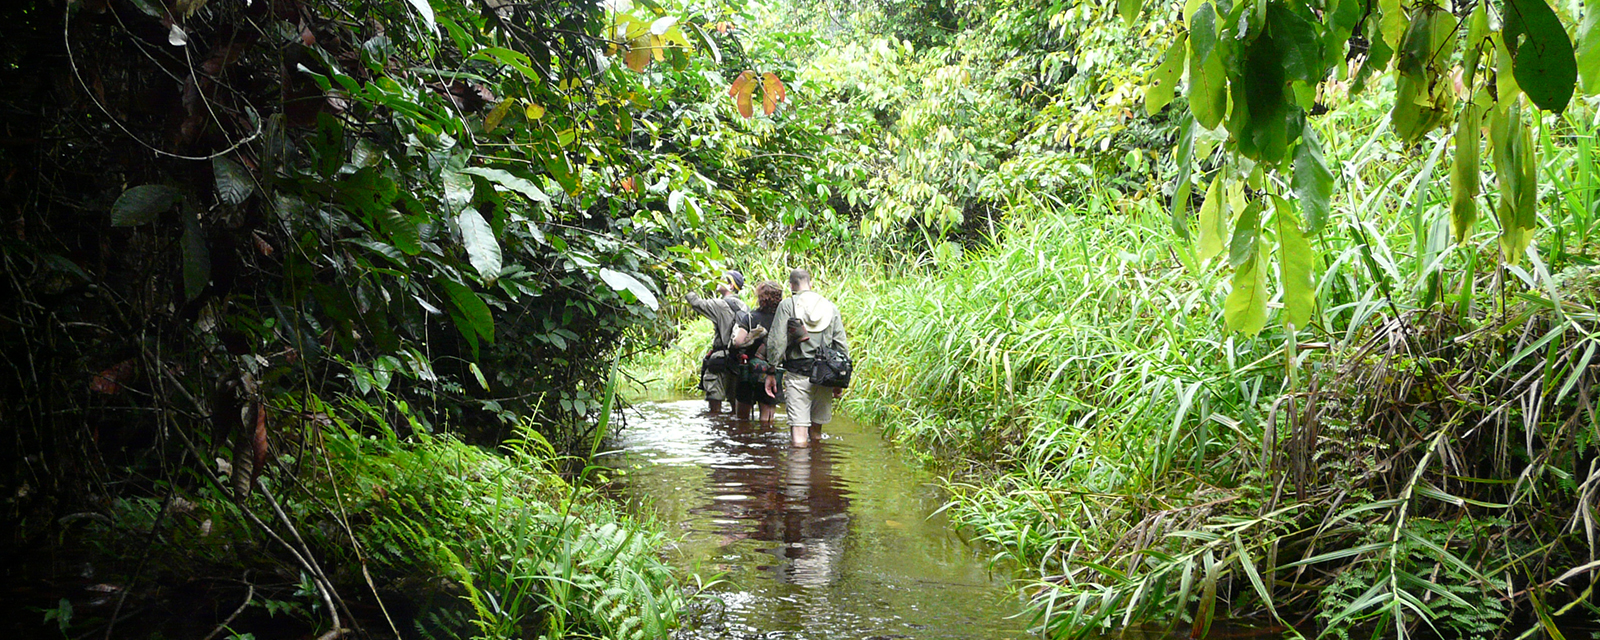 Zoo scientists trekking through the African rainforest